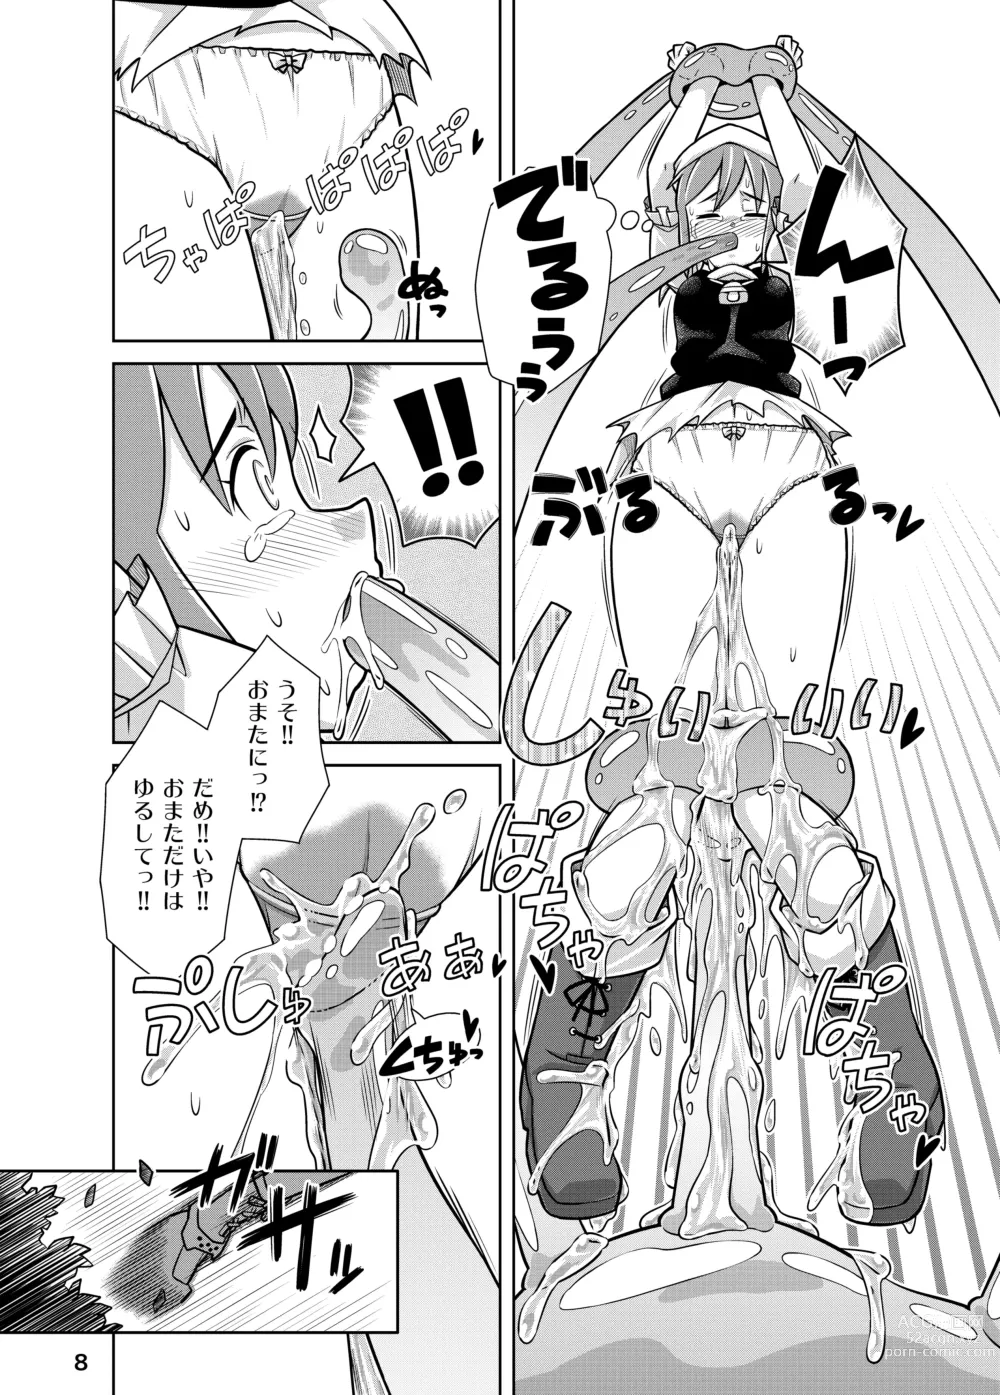 Page 8 of doujinshi Seisui Otome Fantasia 1